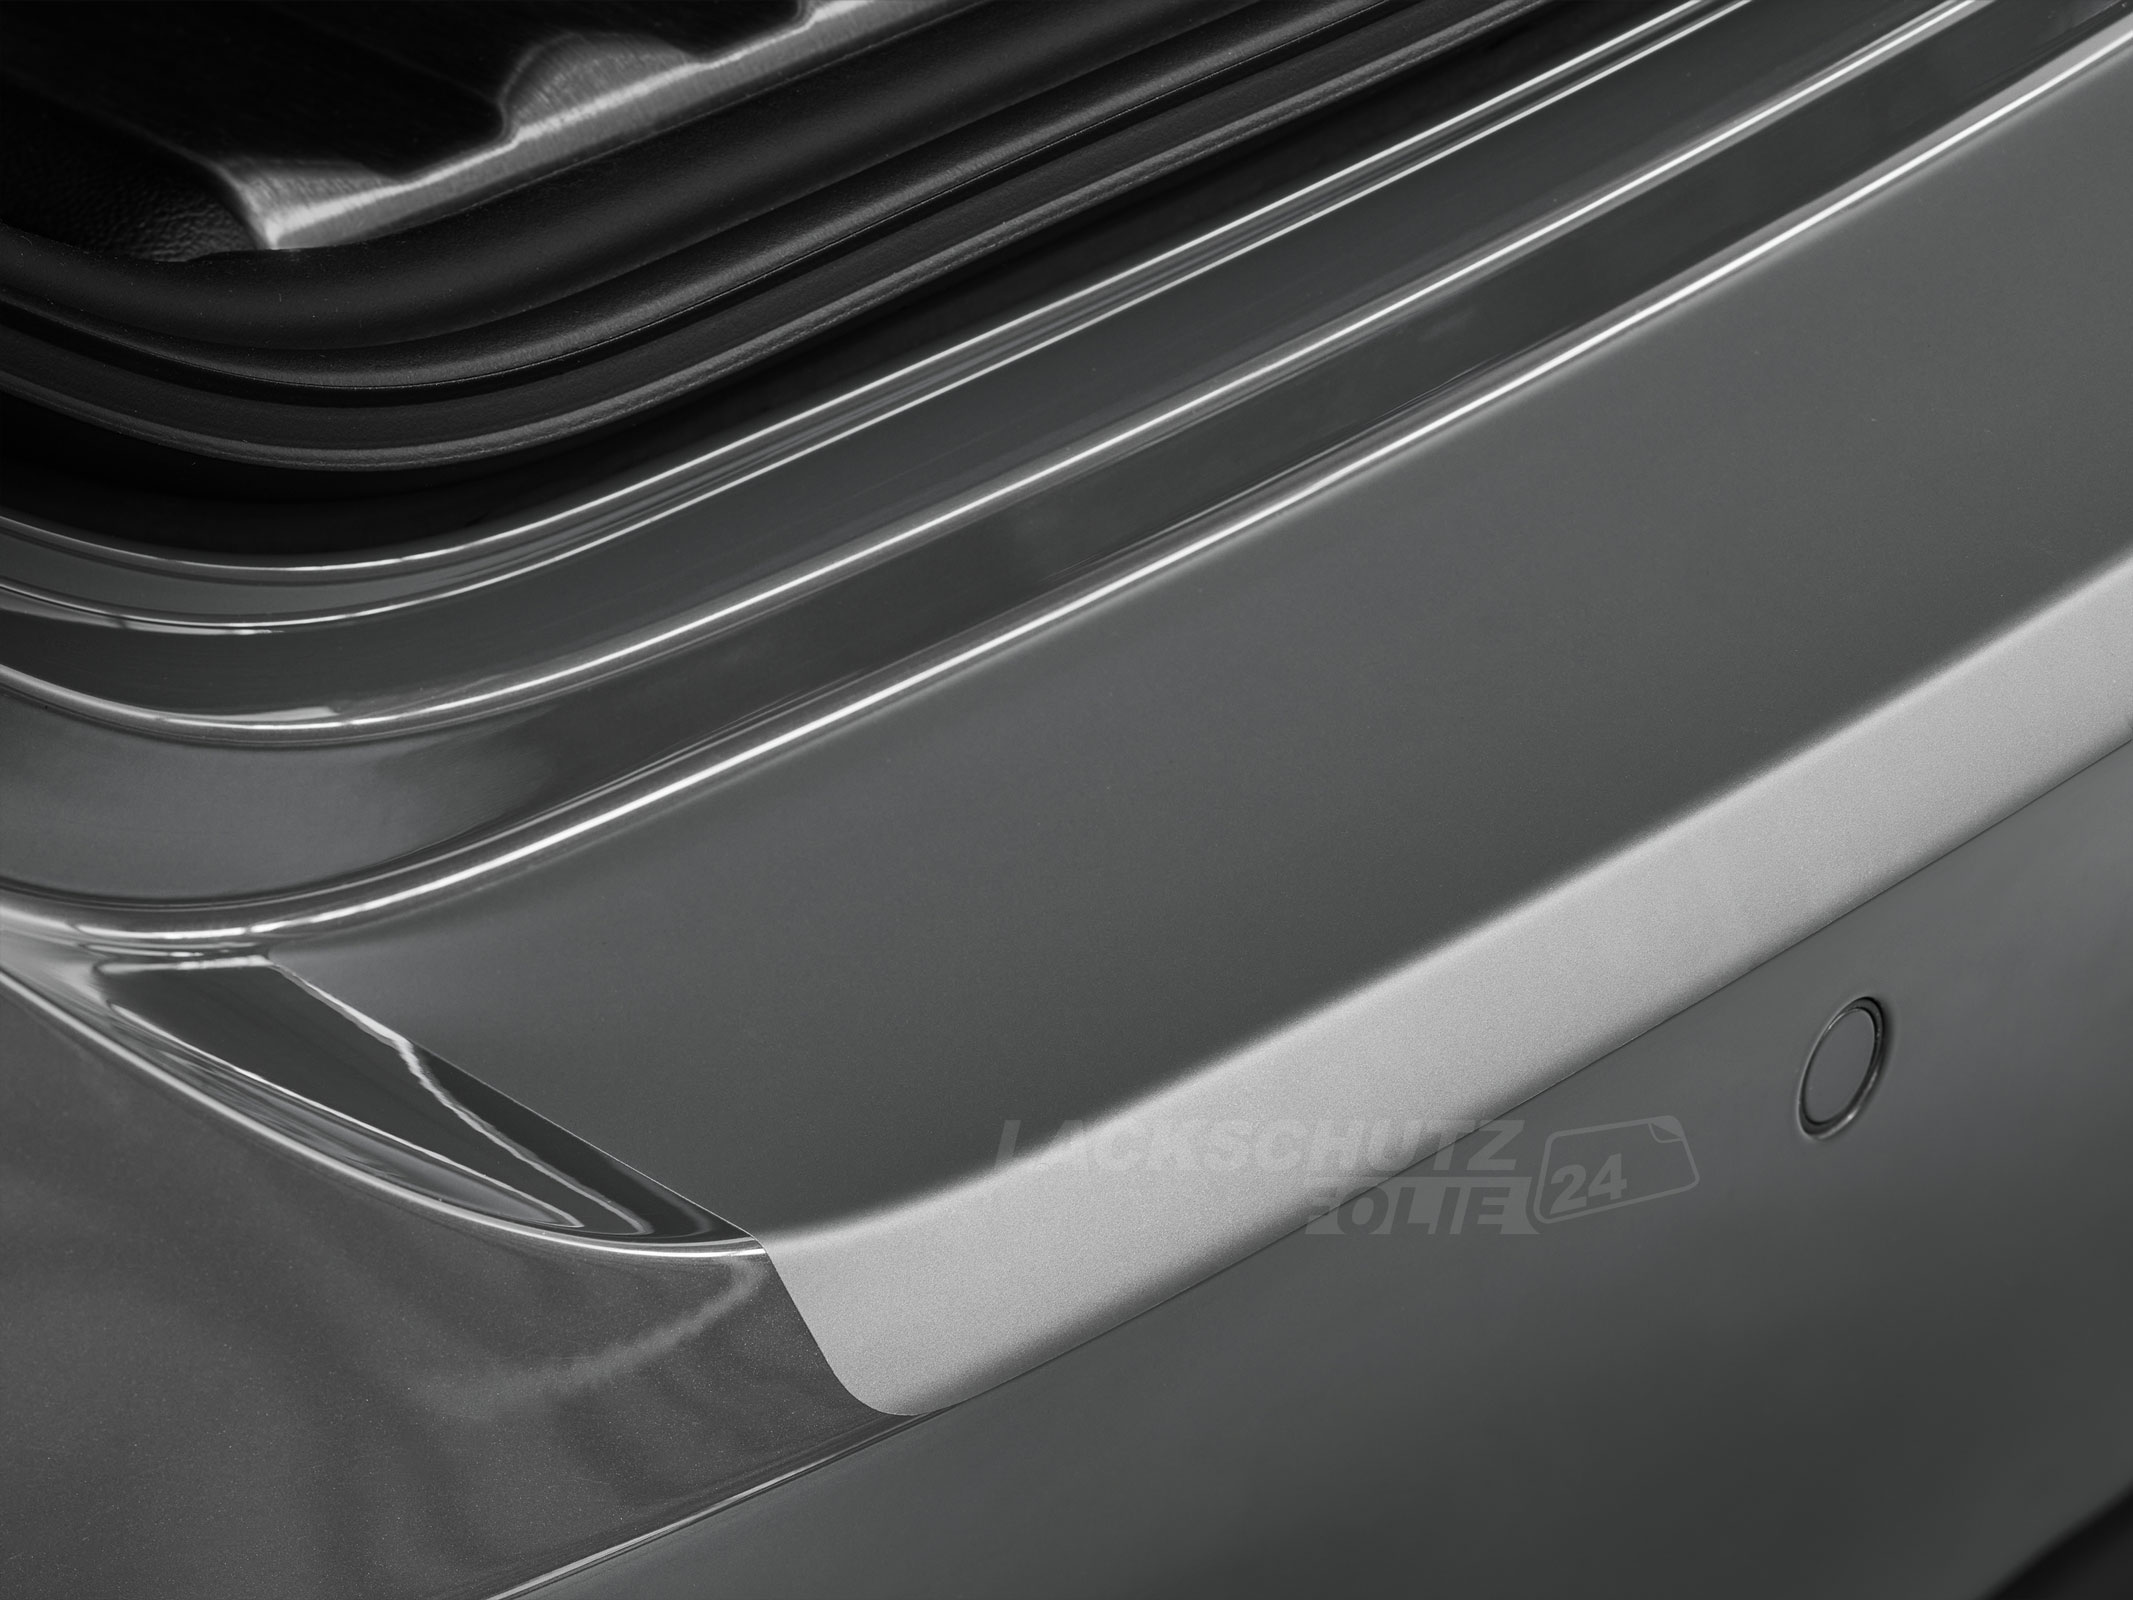 Ladekantenschutzfolie - Transparent Glatt MATT 110 µm stark  für Dacia Lodgy ab BJ 05/2012